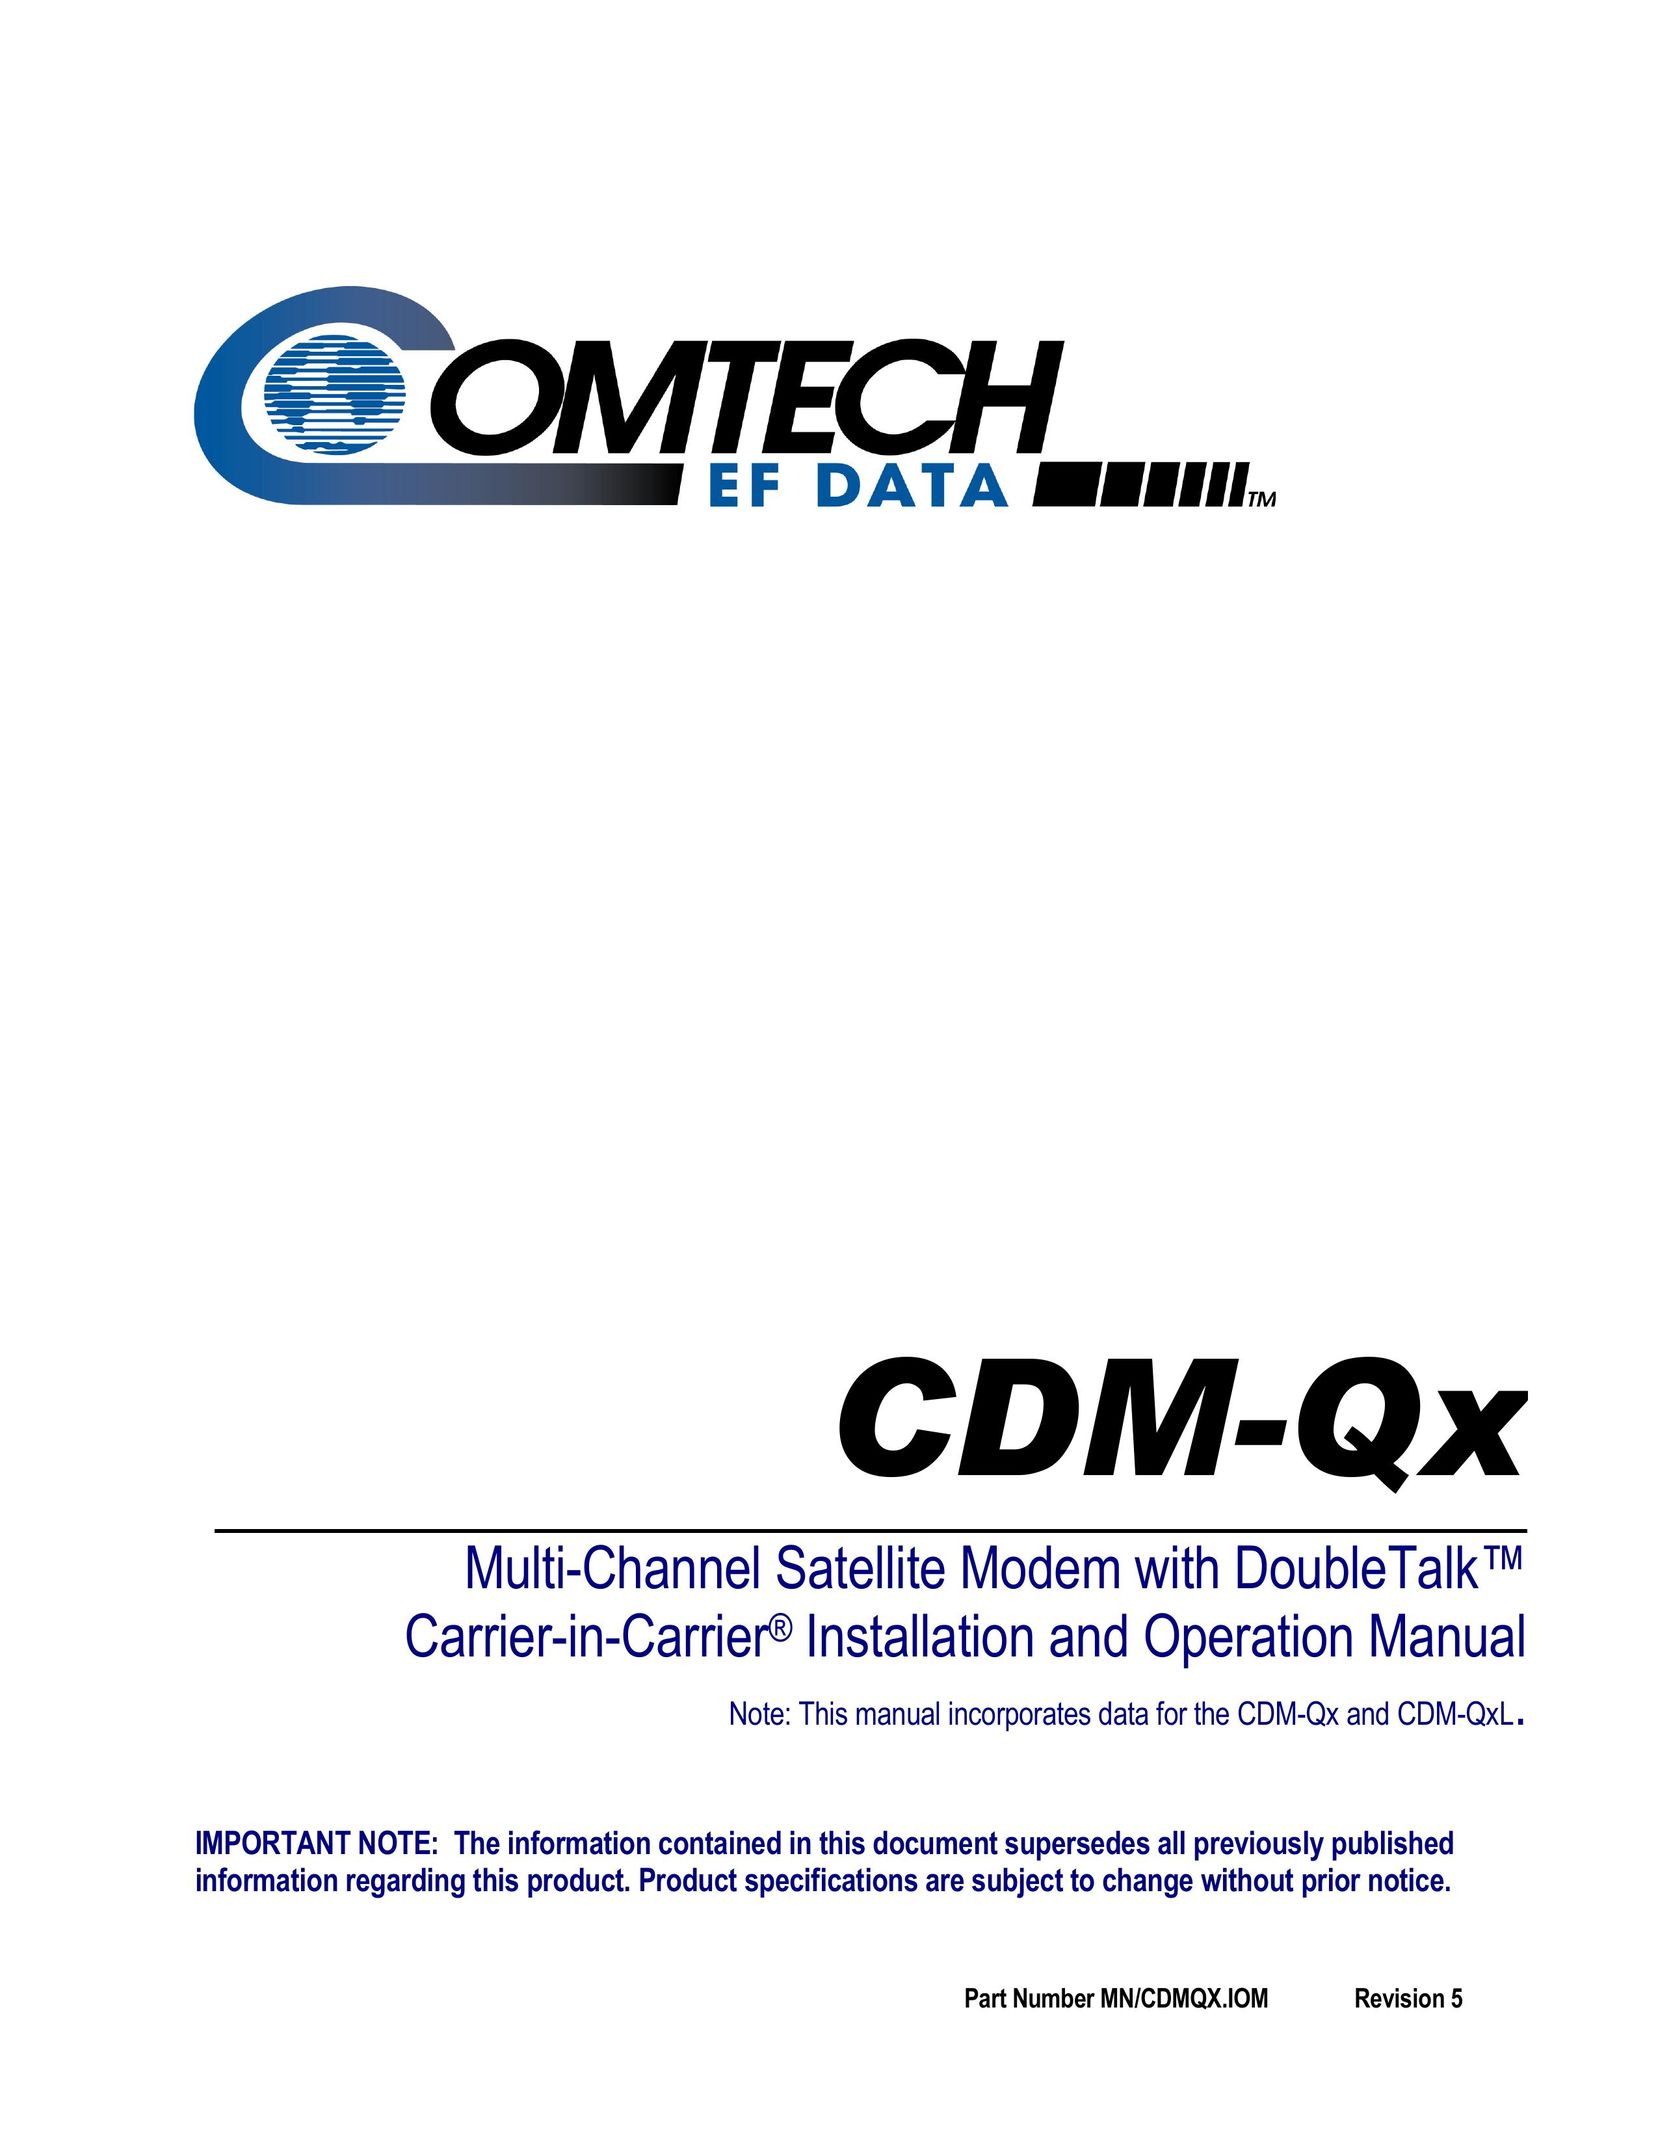 Mocomtech CDM-QX Modem User Manual